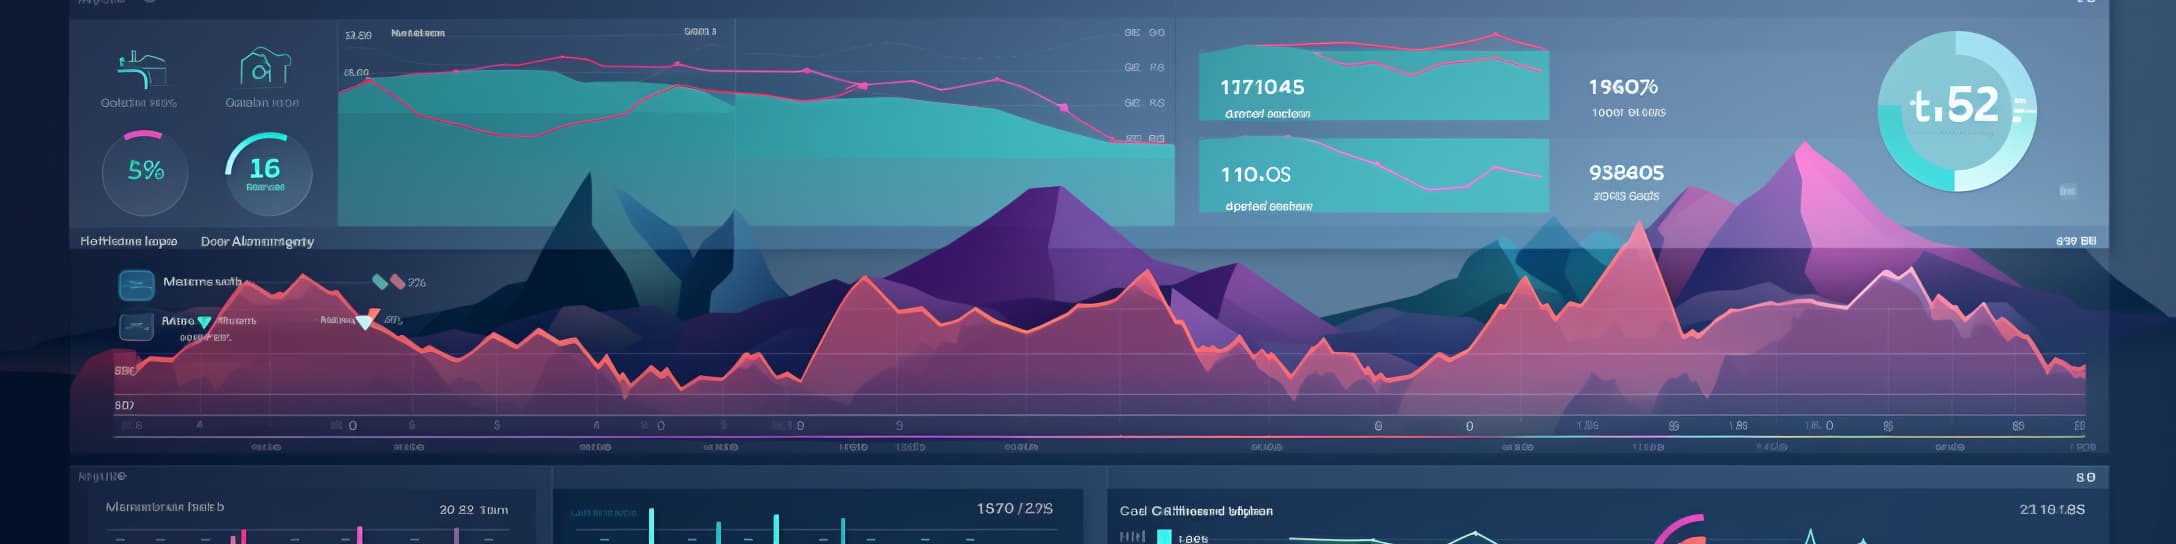 Web Analytics Dashboard - Blog Image